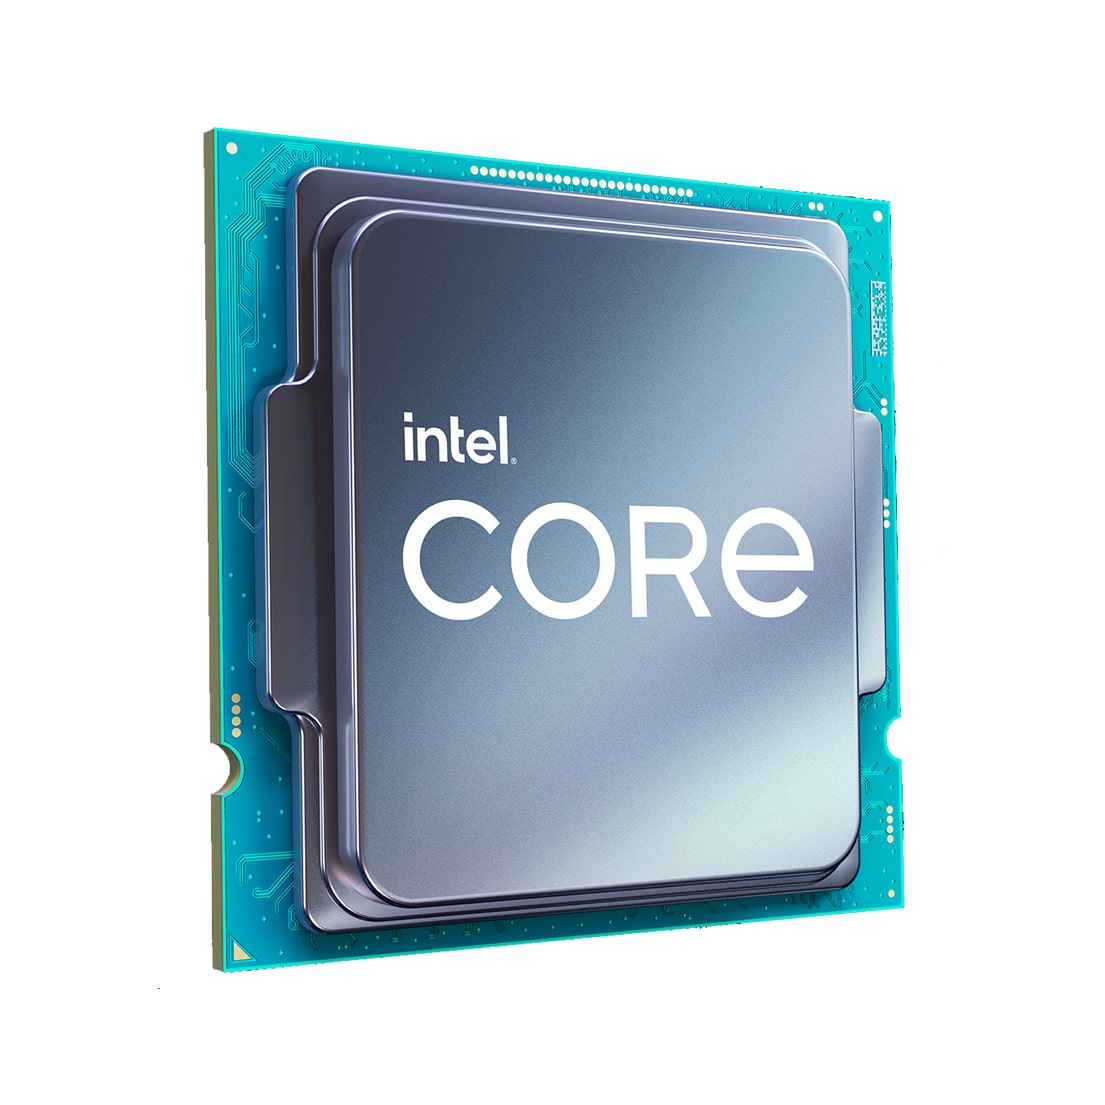 Intel Core i5-11600K 3.90 GHz Processor